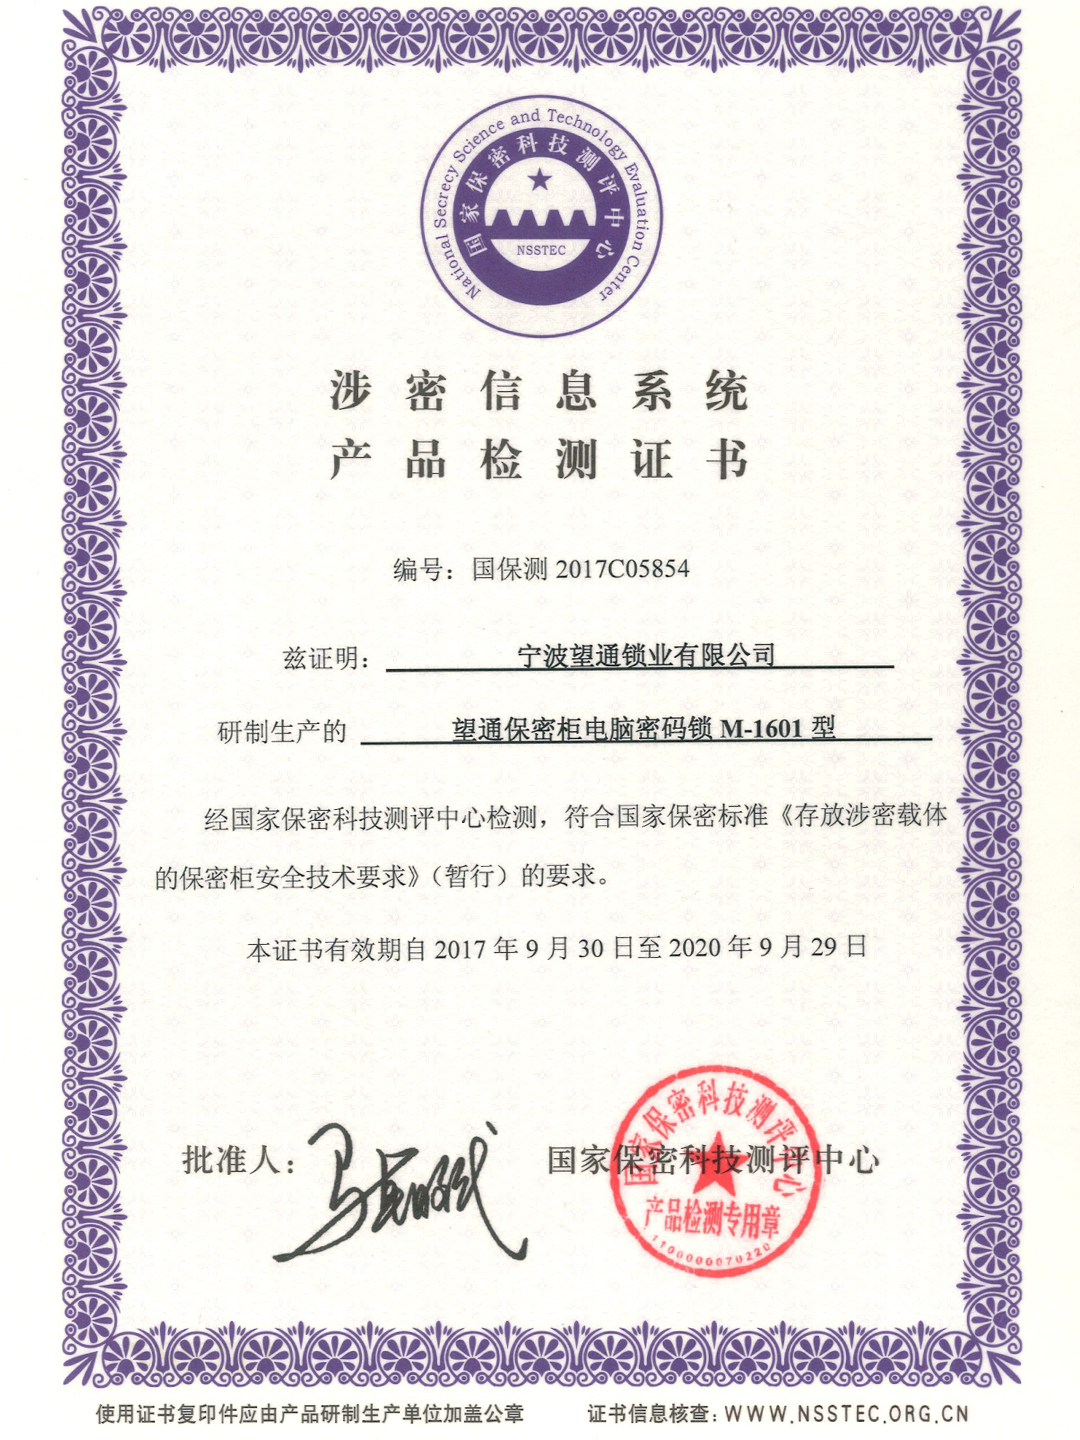 M-1601 Security Test Certificate